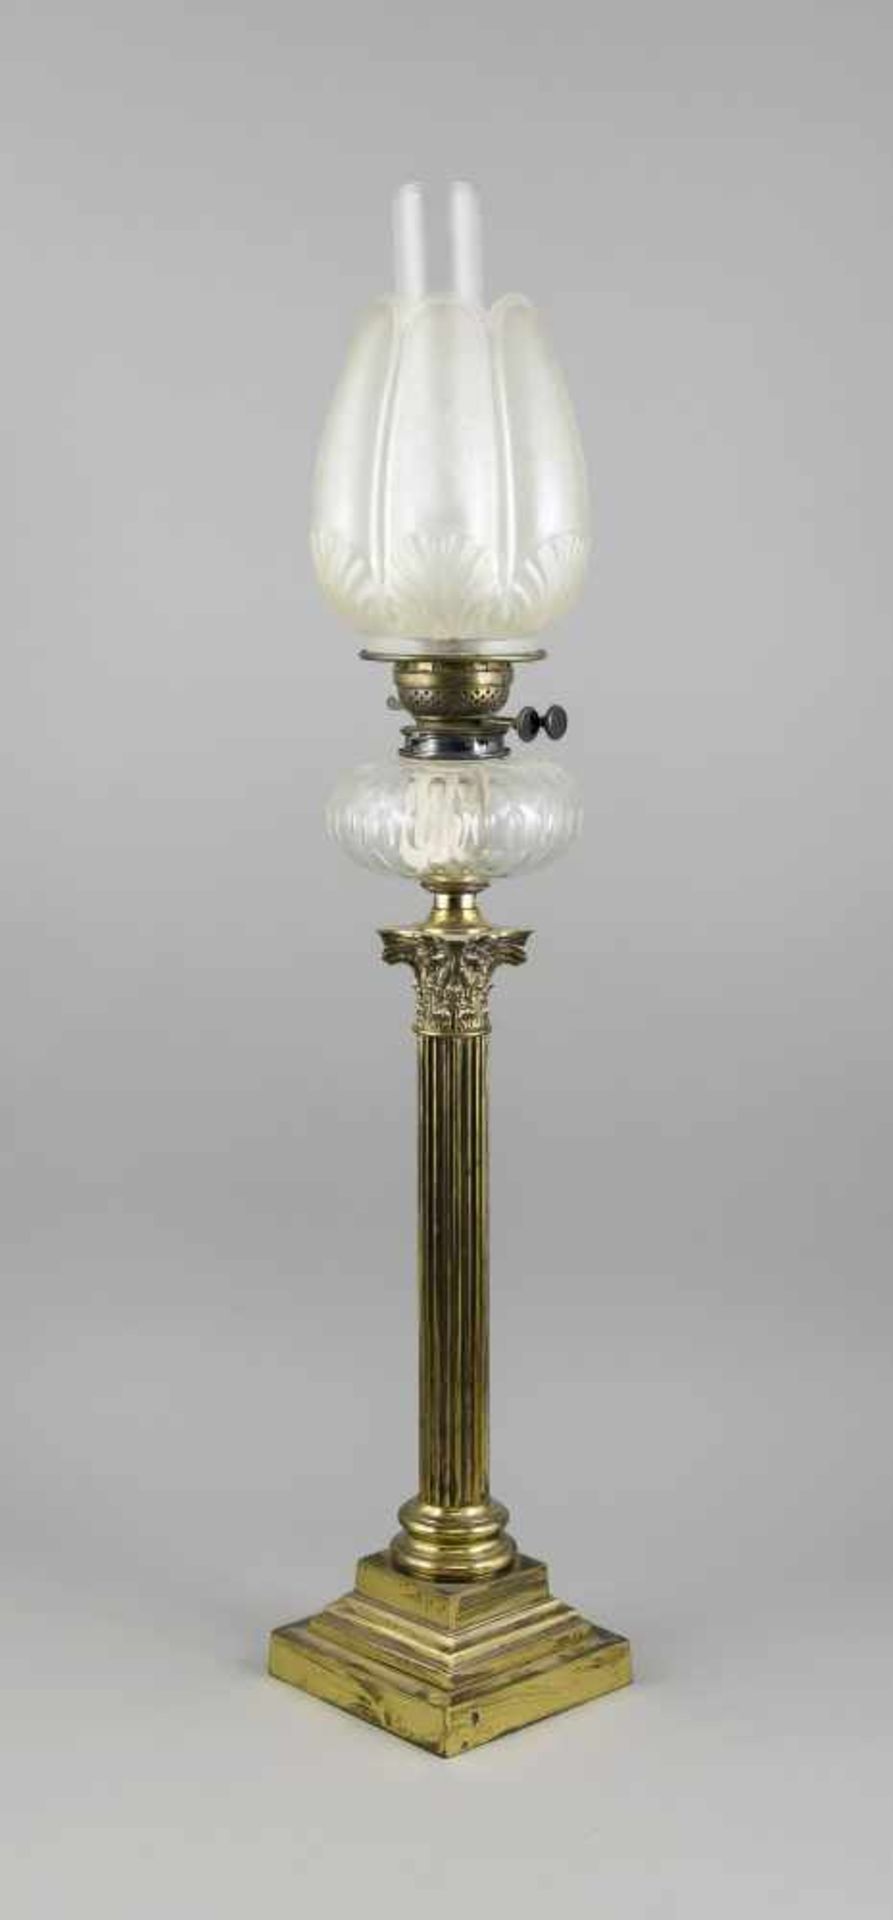 Große Petroleumlampe, wohl England, um 1900, bez. "Hinks & Sons", mehrstufiger,quadratischer